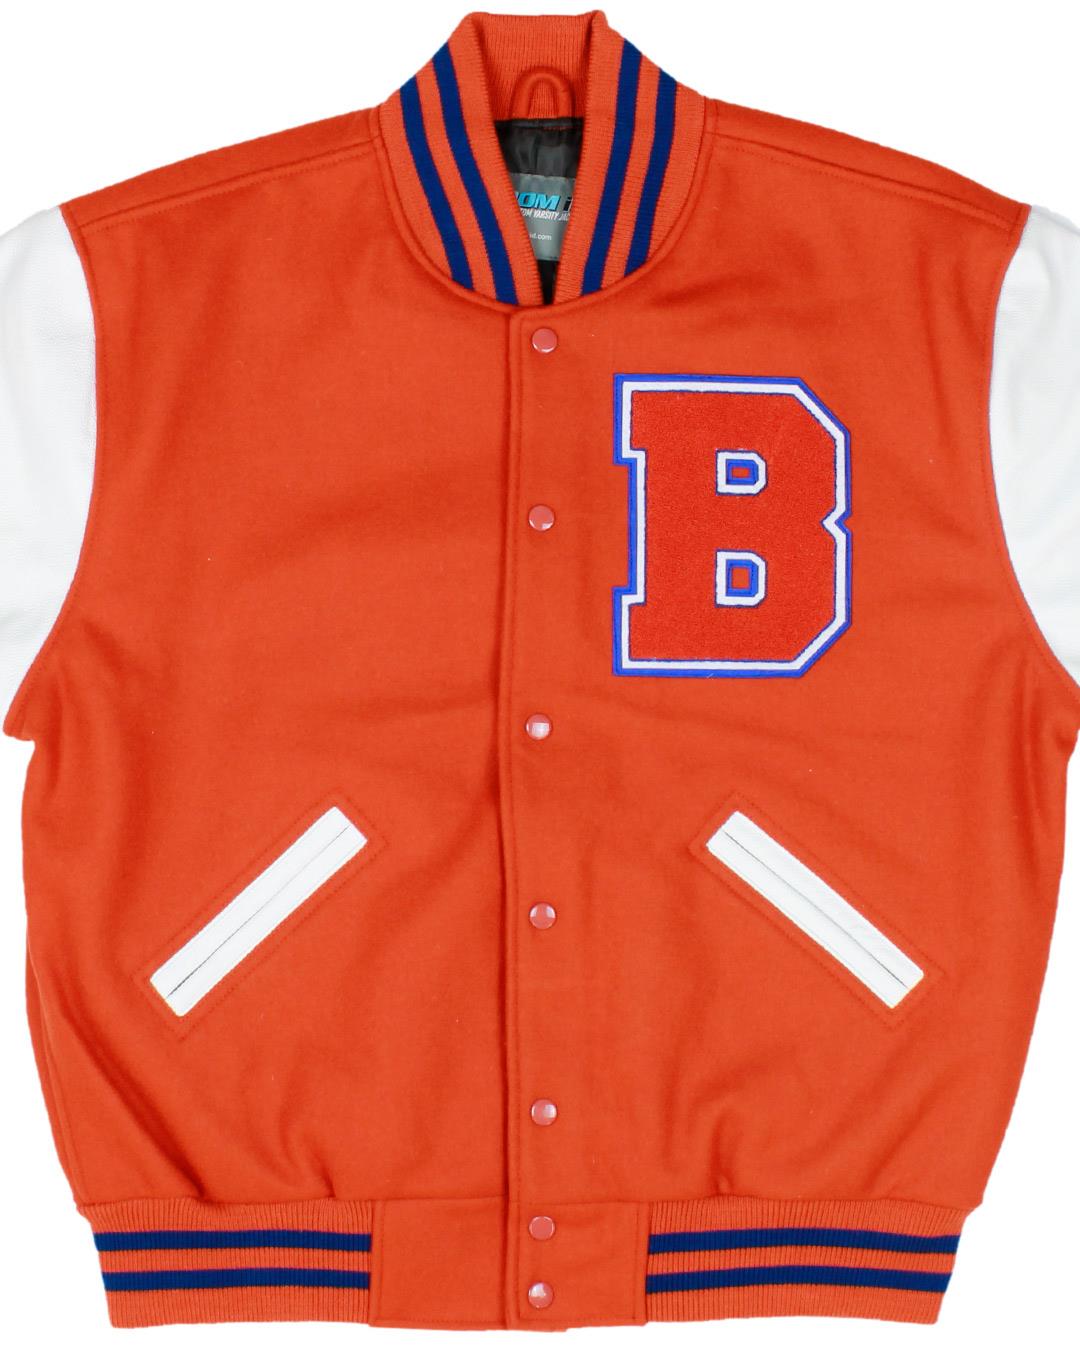 Bartow High School Letterman Jacket, Bartow, FL - Front